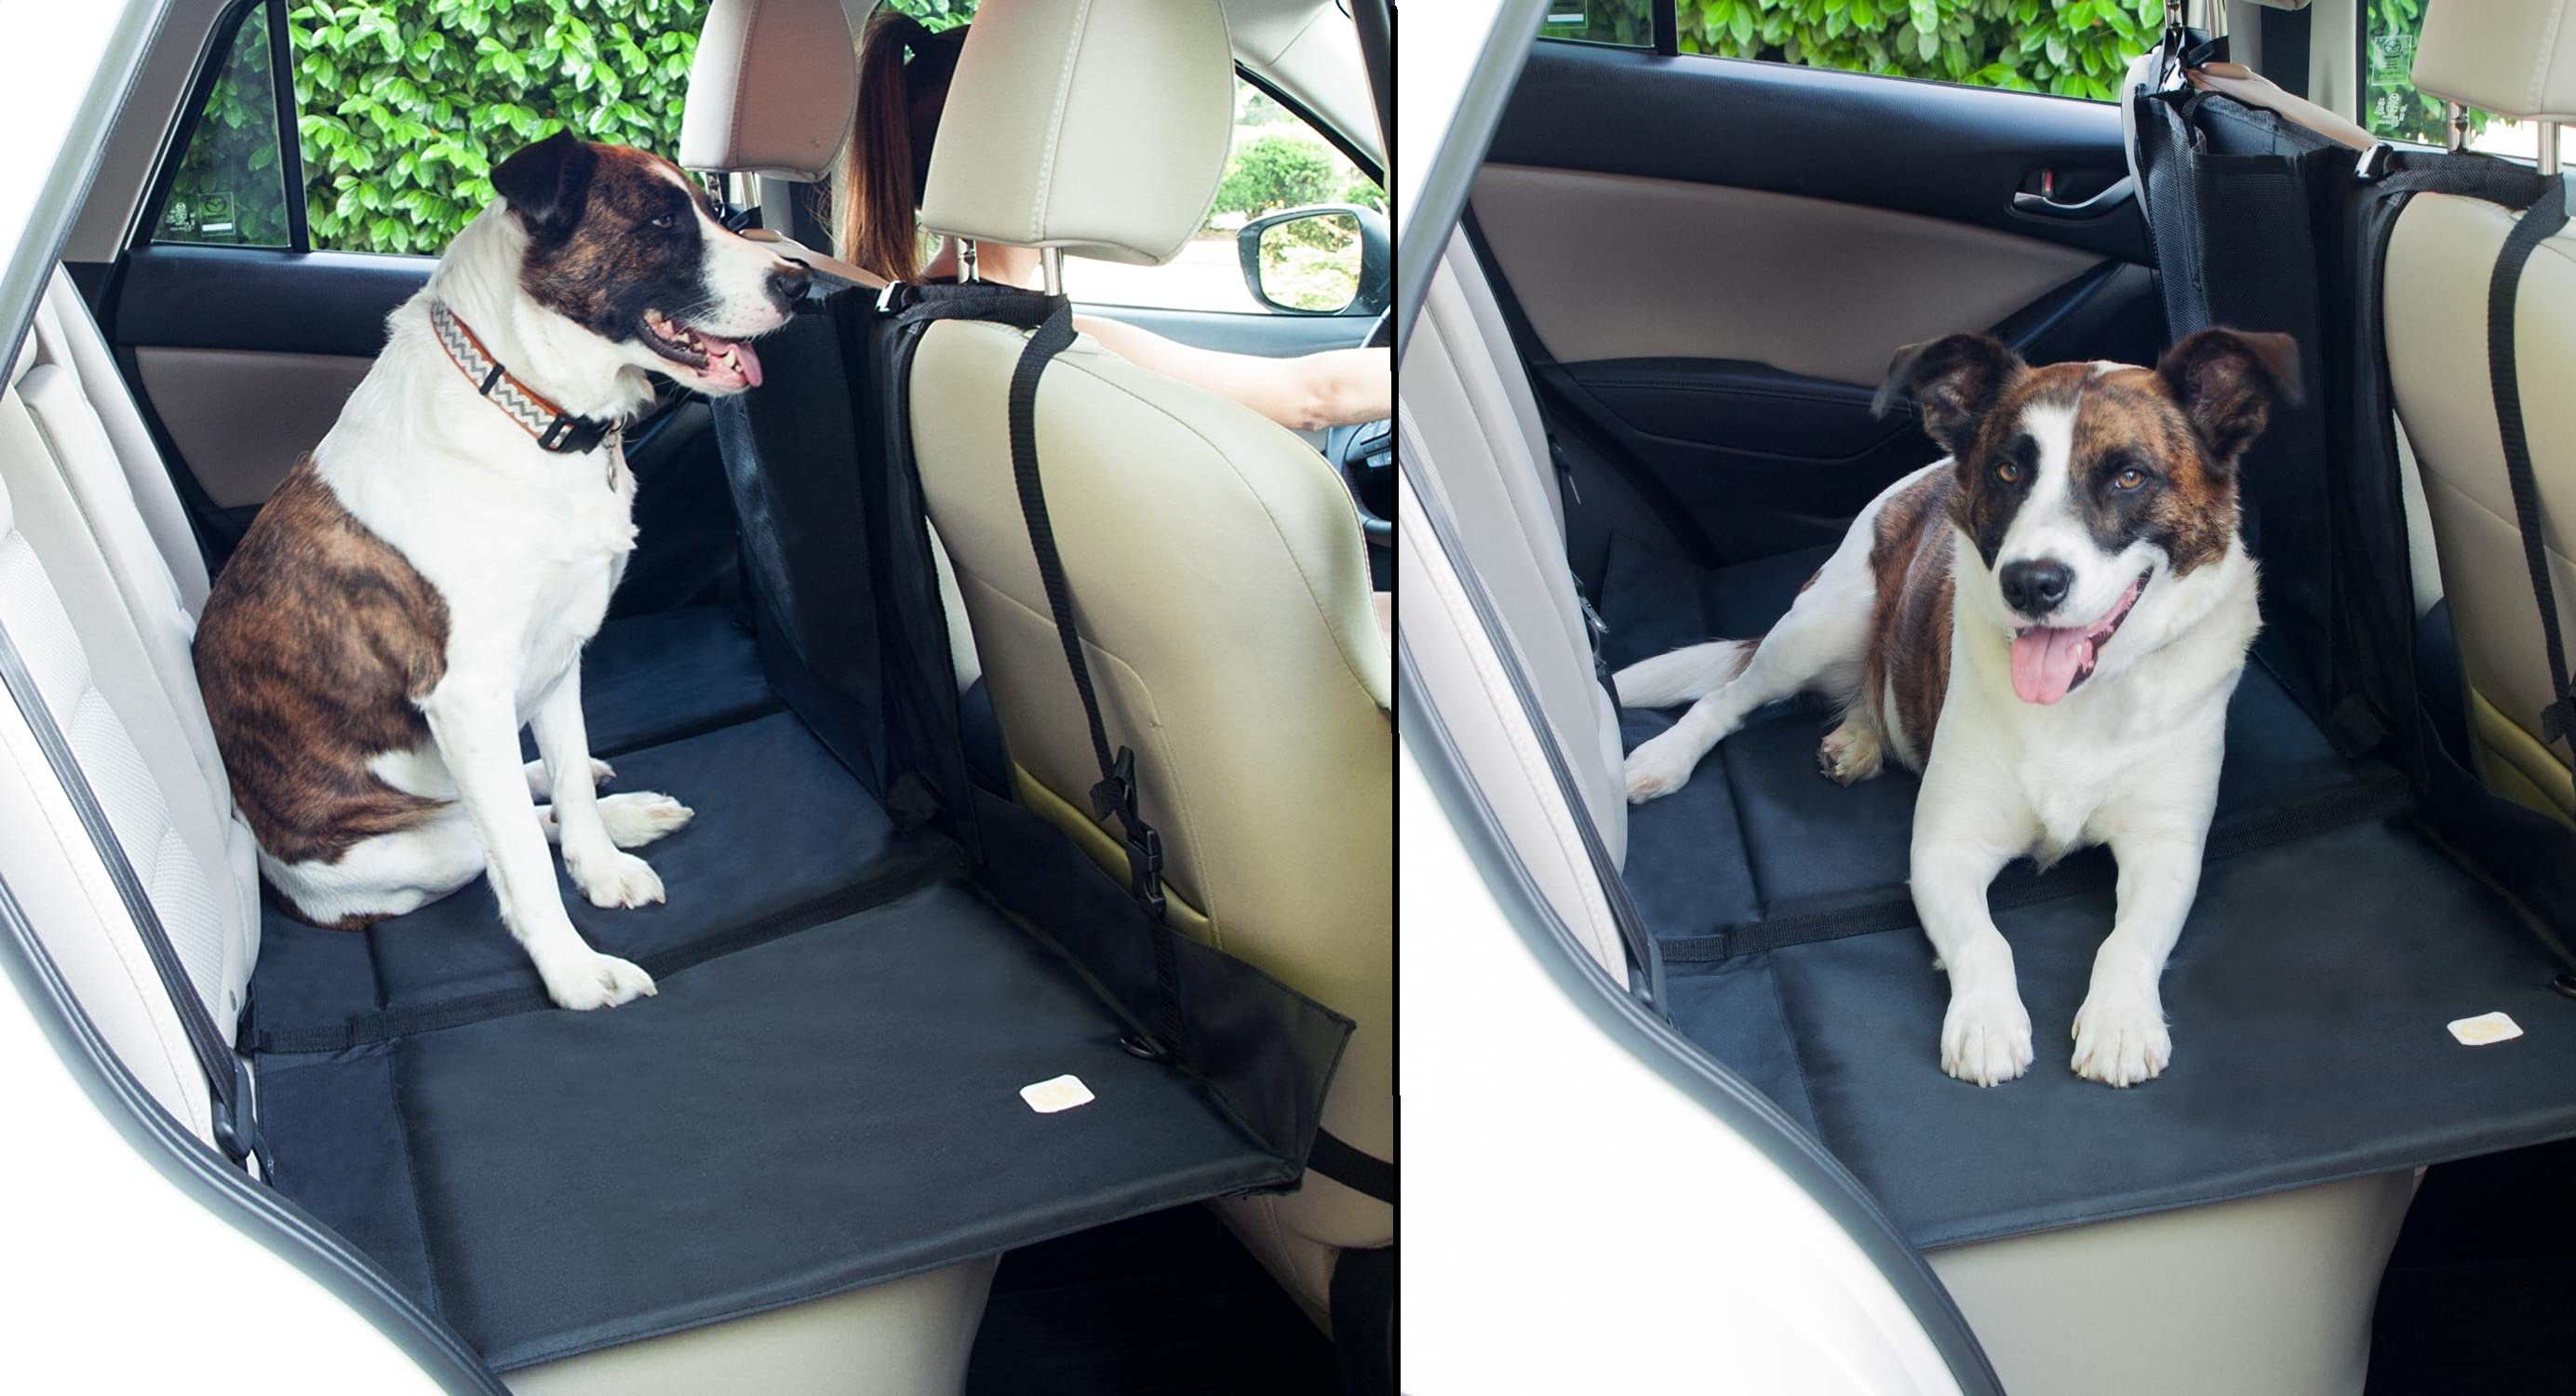 ARRANUI Backseat Extender for Dogs - Dog Back Seat Bridge